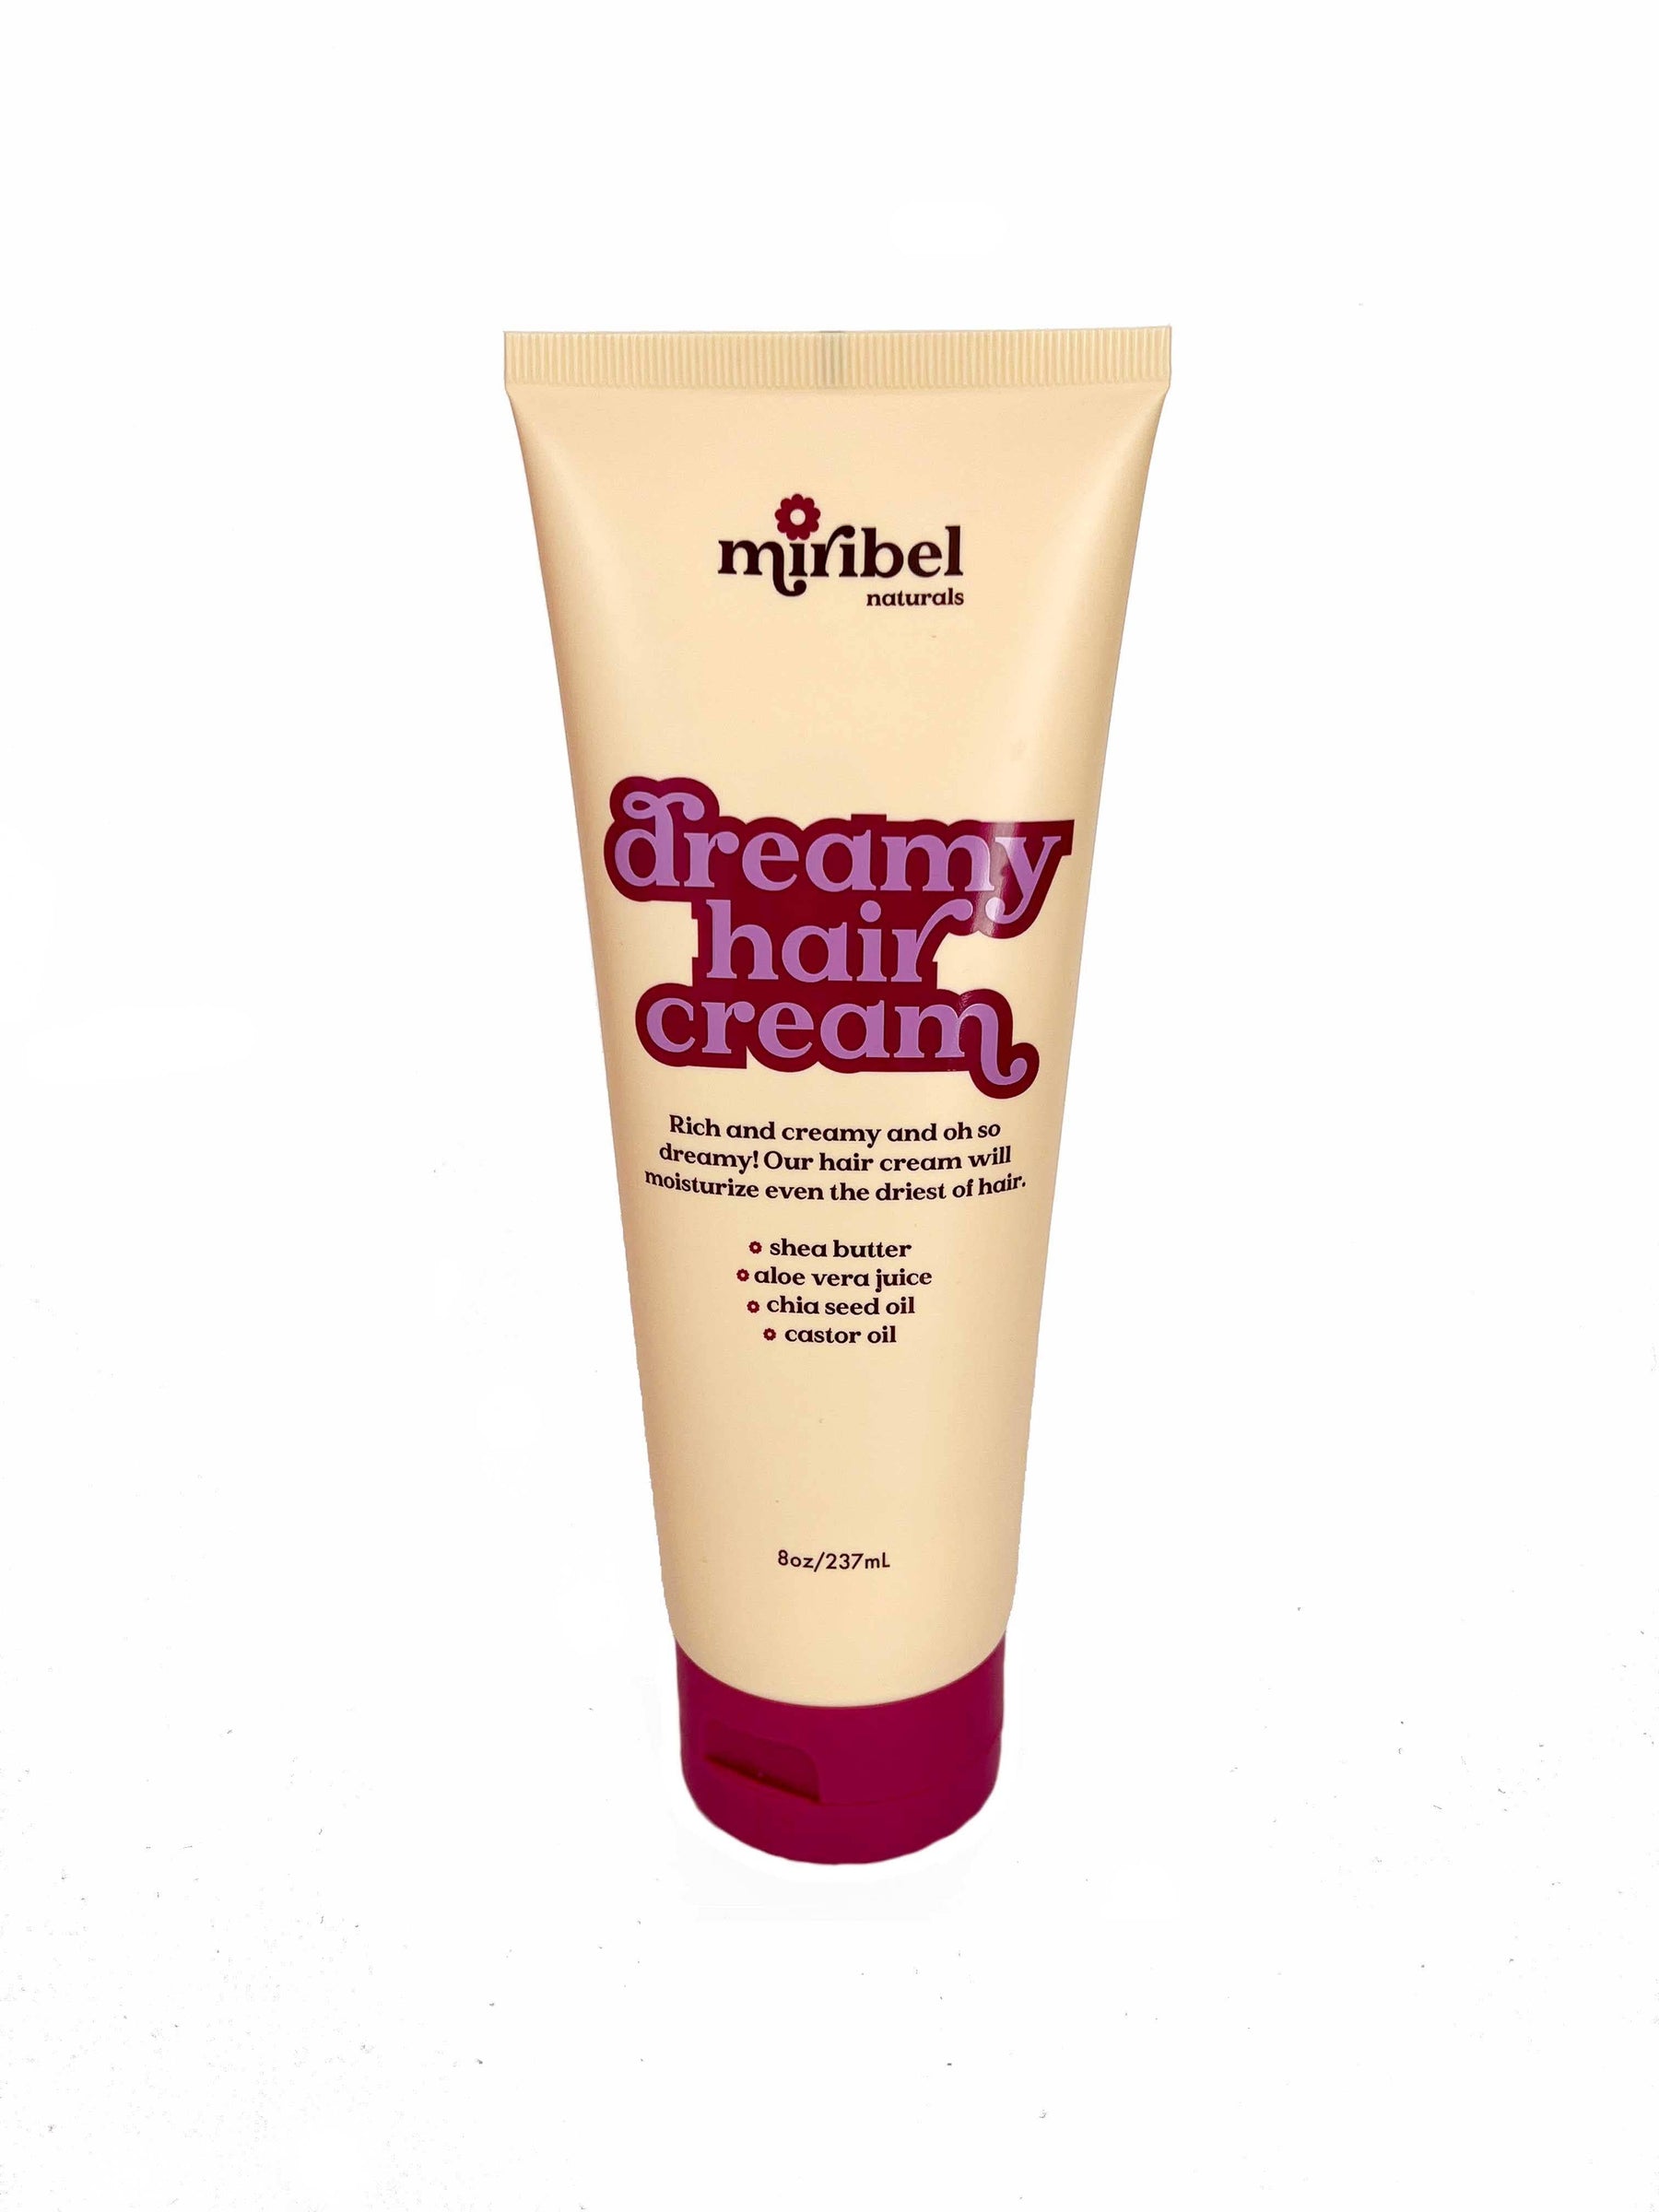 Miribel Naturals Dreamy Hair Cream 8 oz